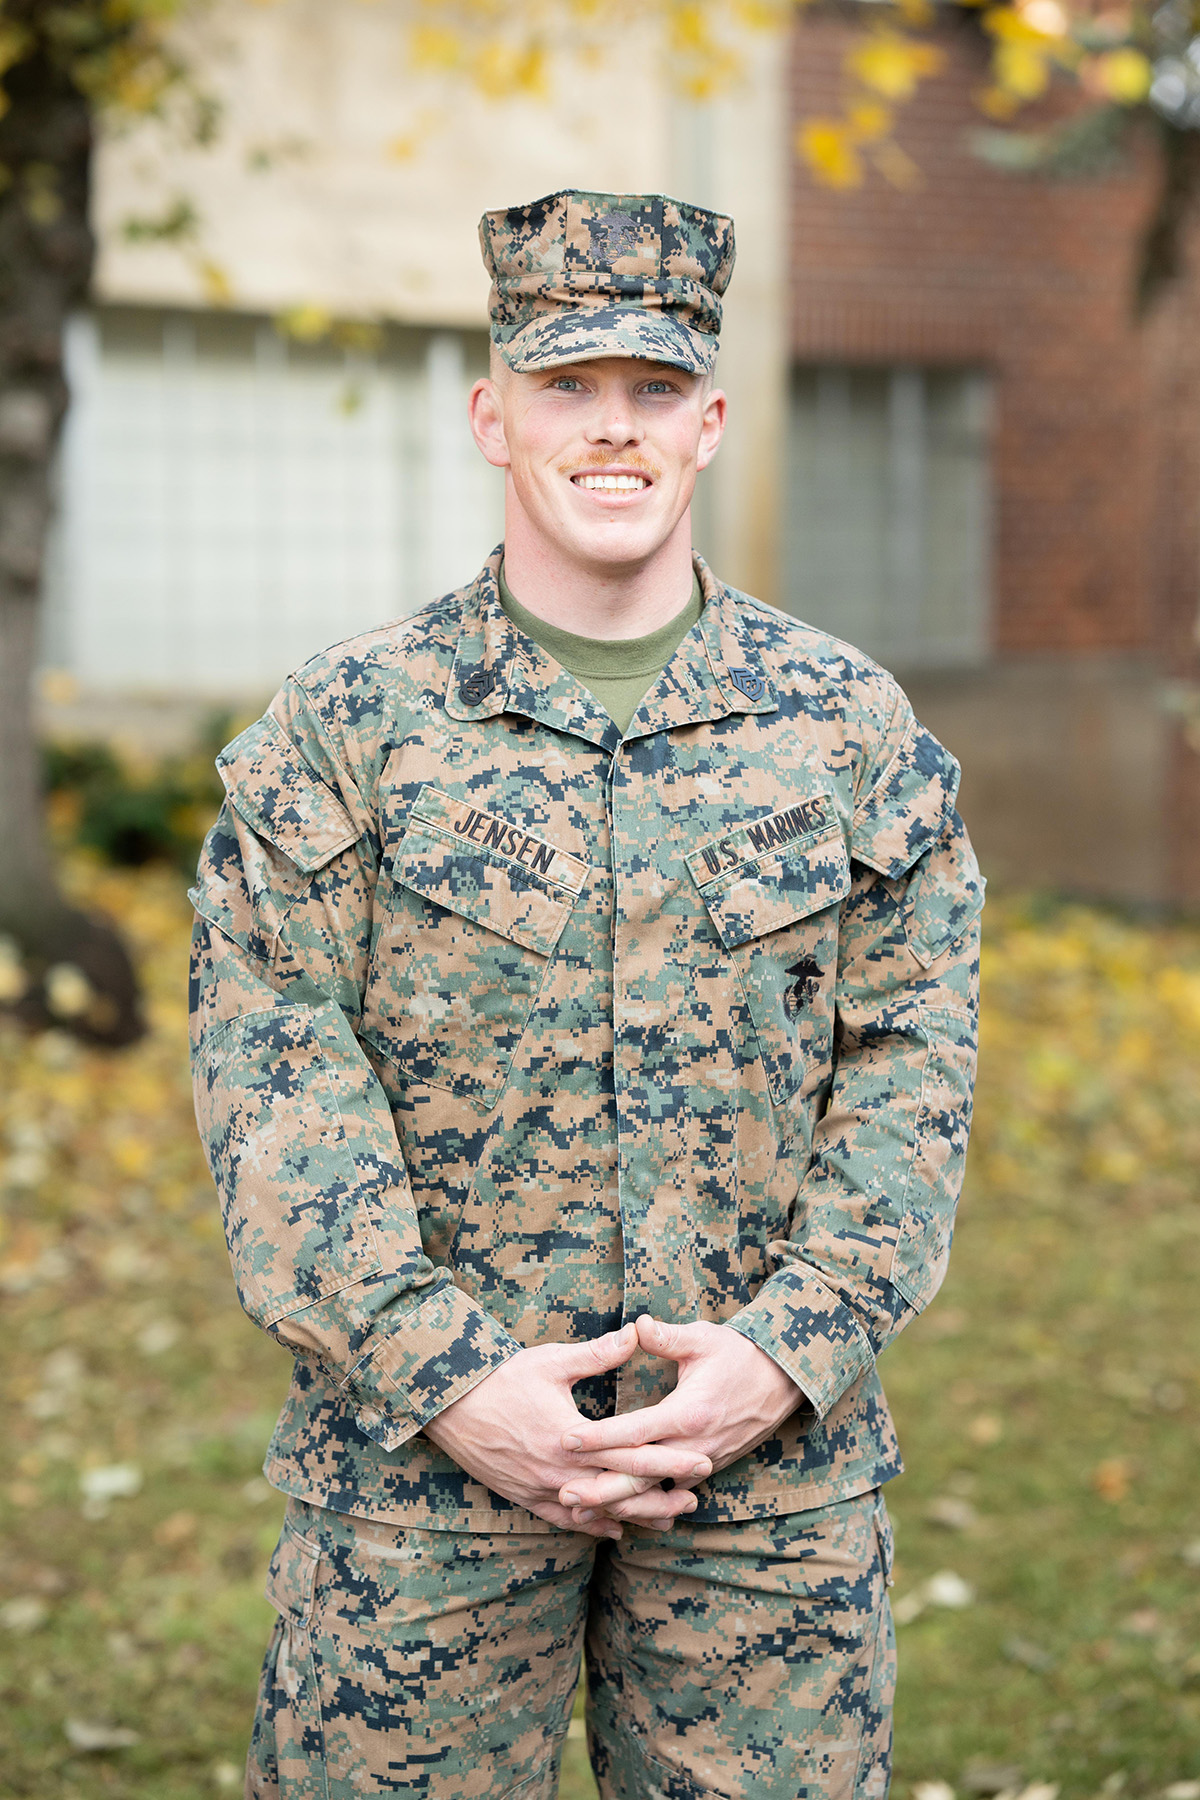 Man wearing battle dress uniform stands in Albertson’s Building